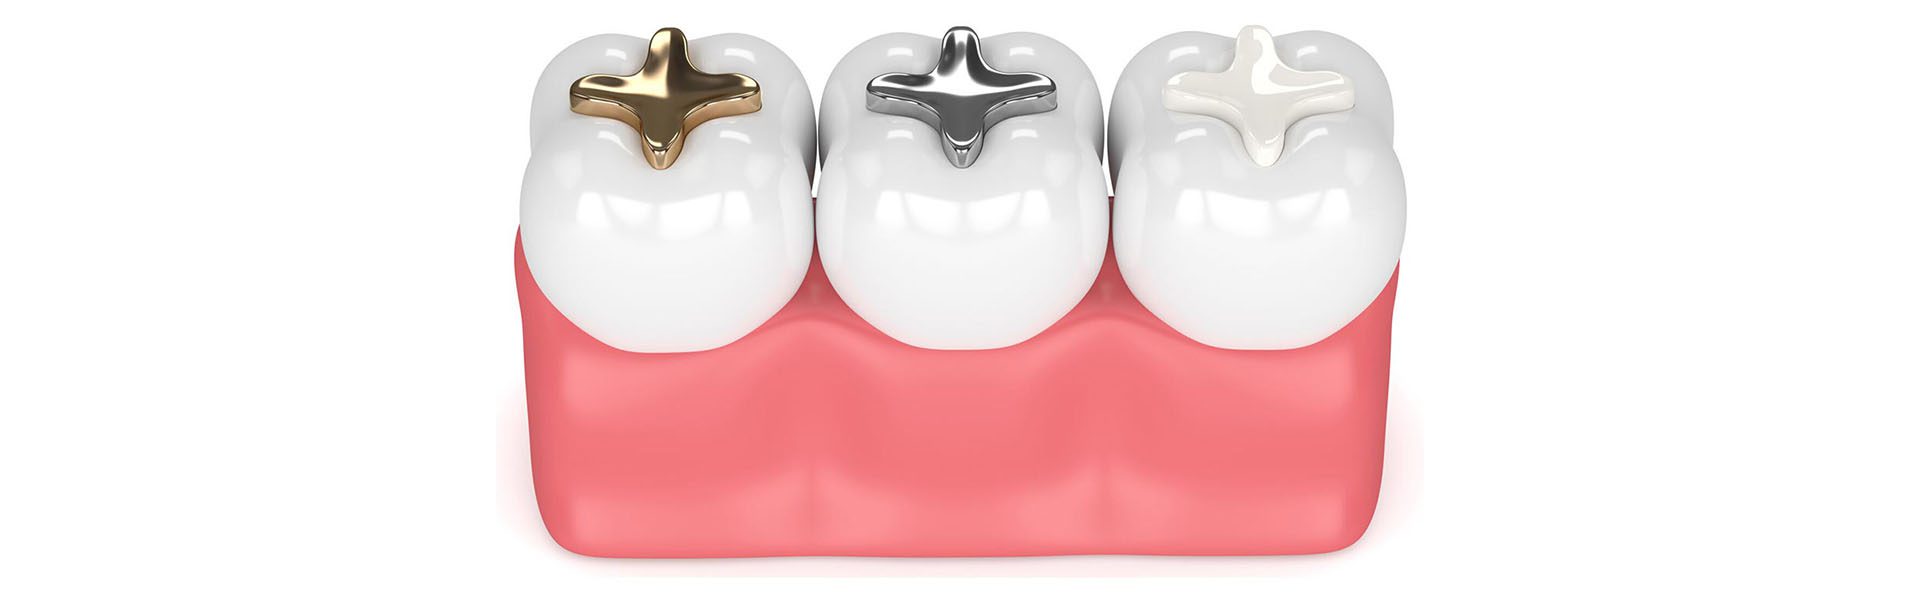 dental filling in sepident.com 2 پر کردن دندان